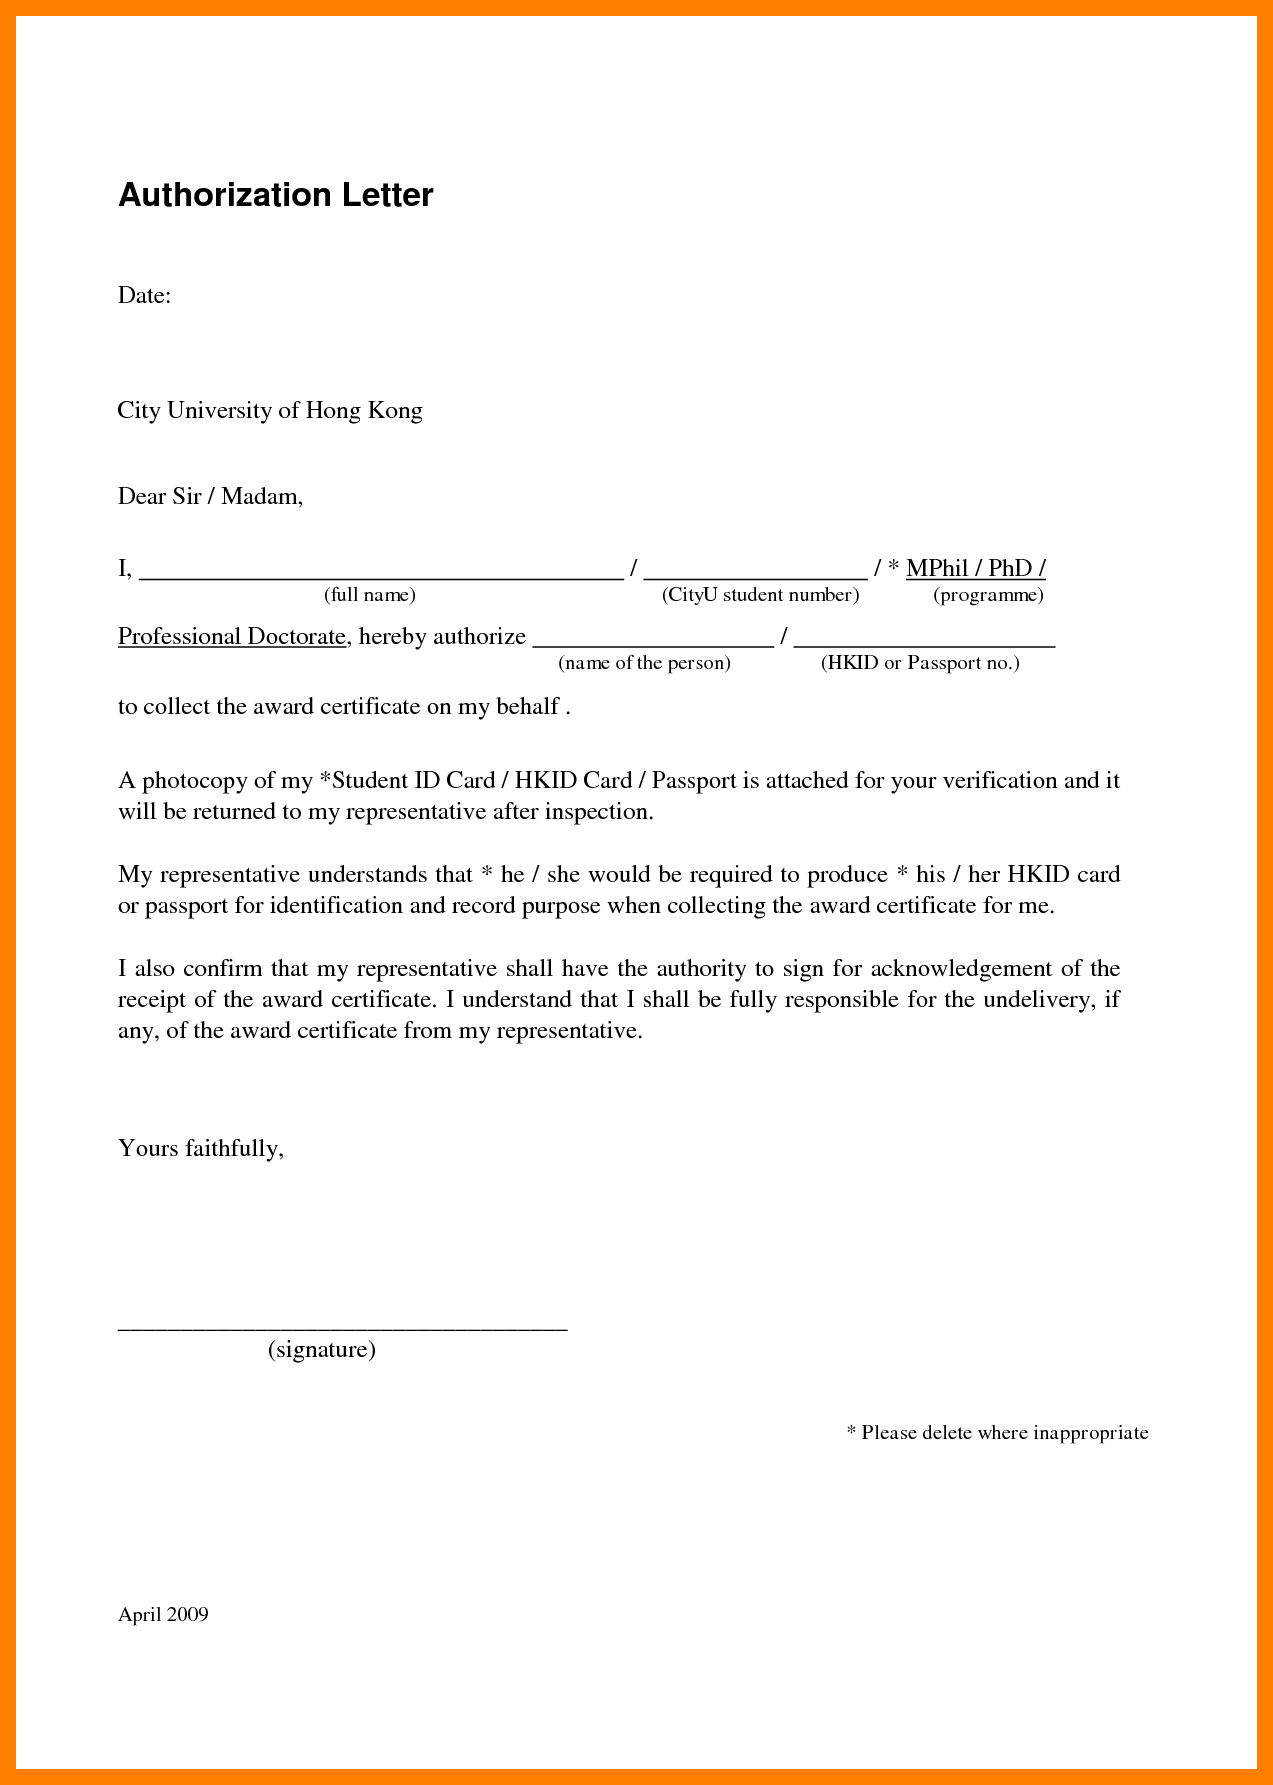 tan surrender application letter format in word